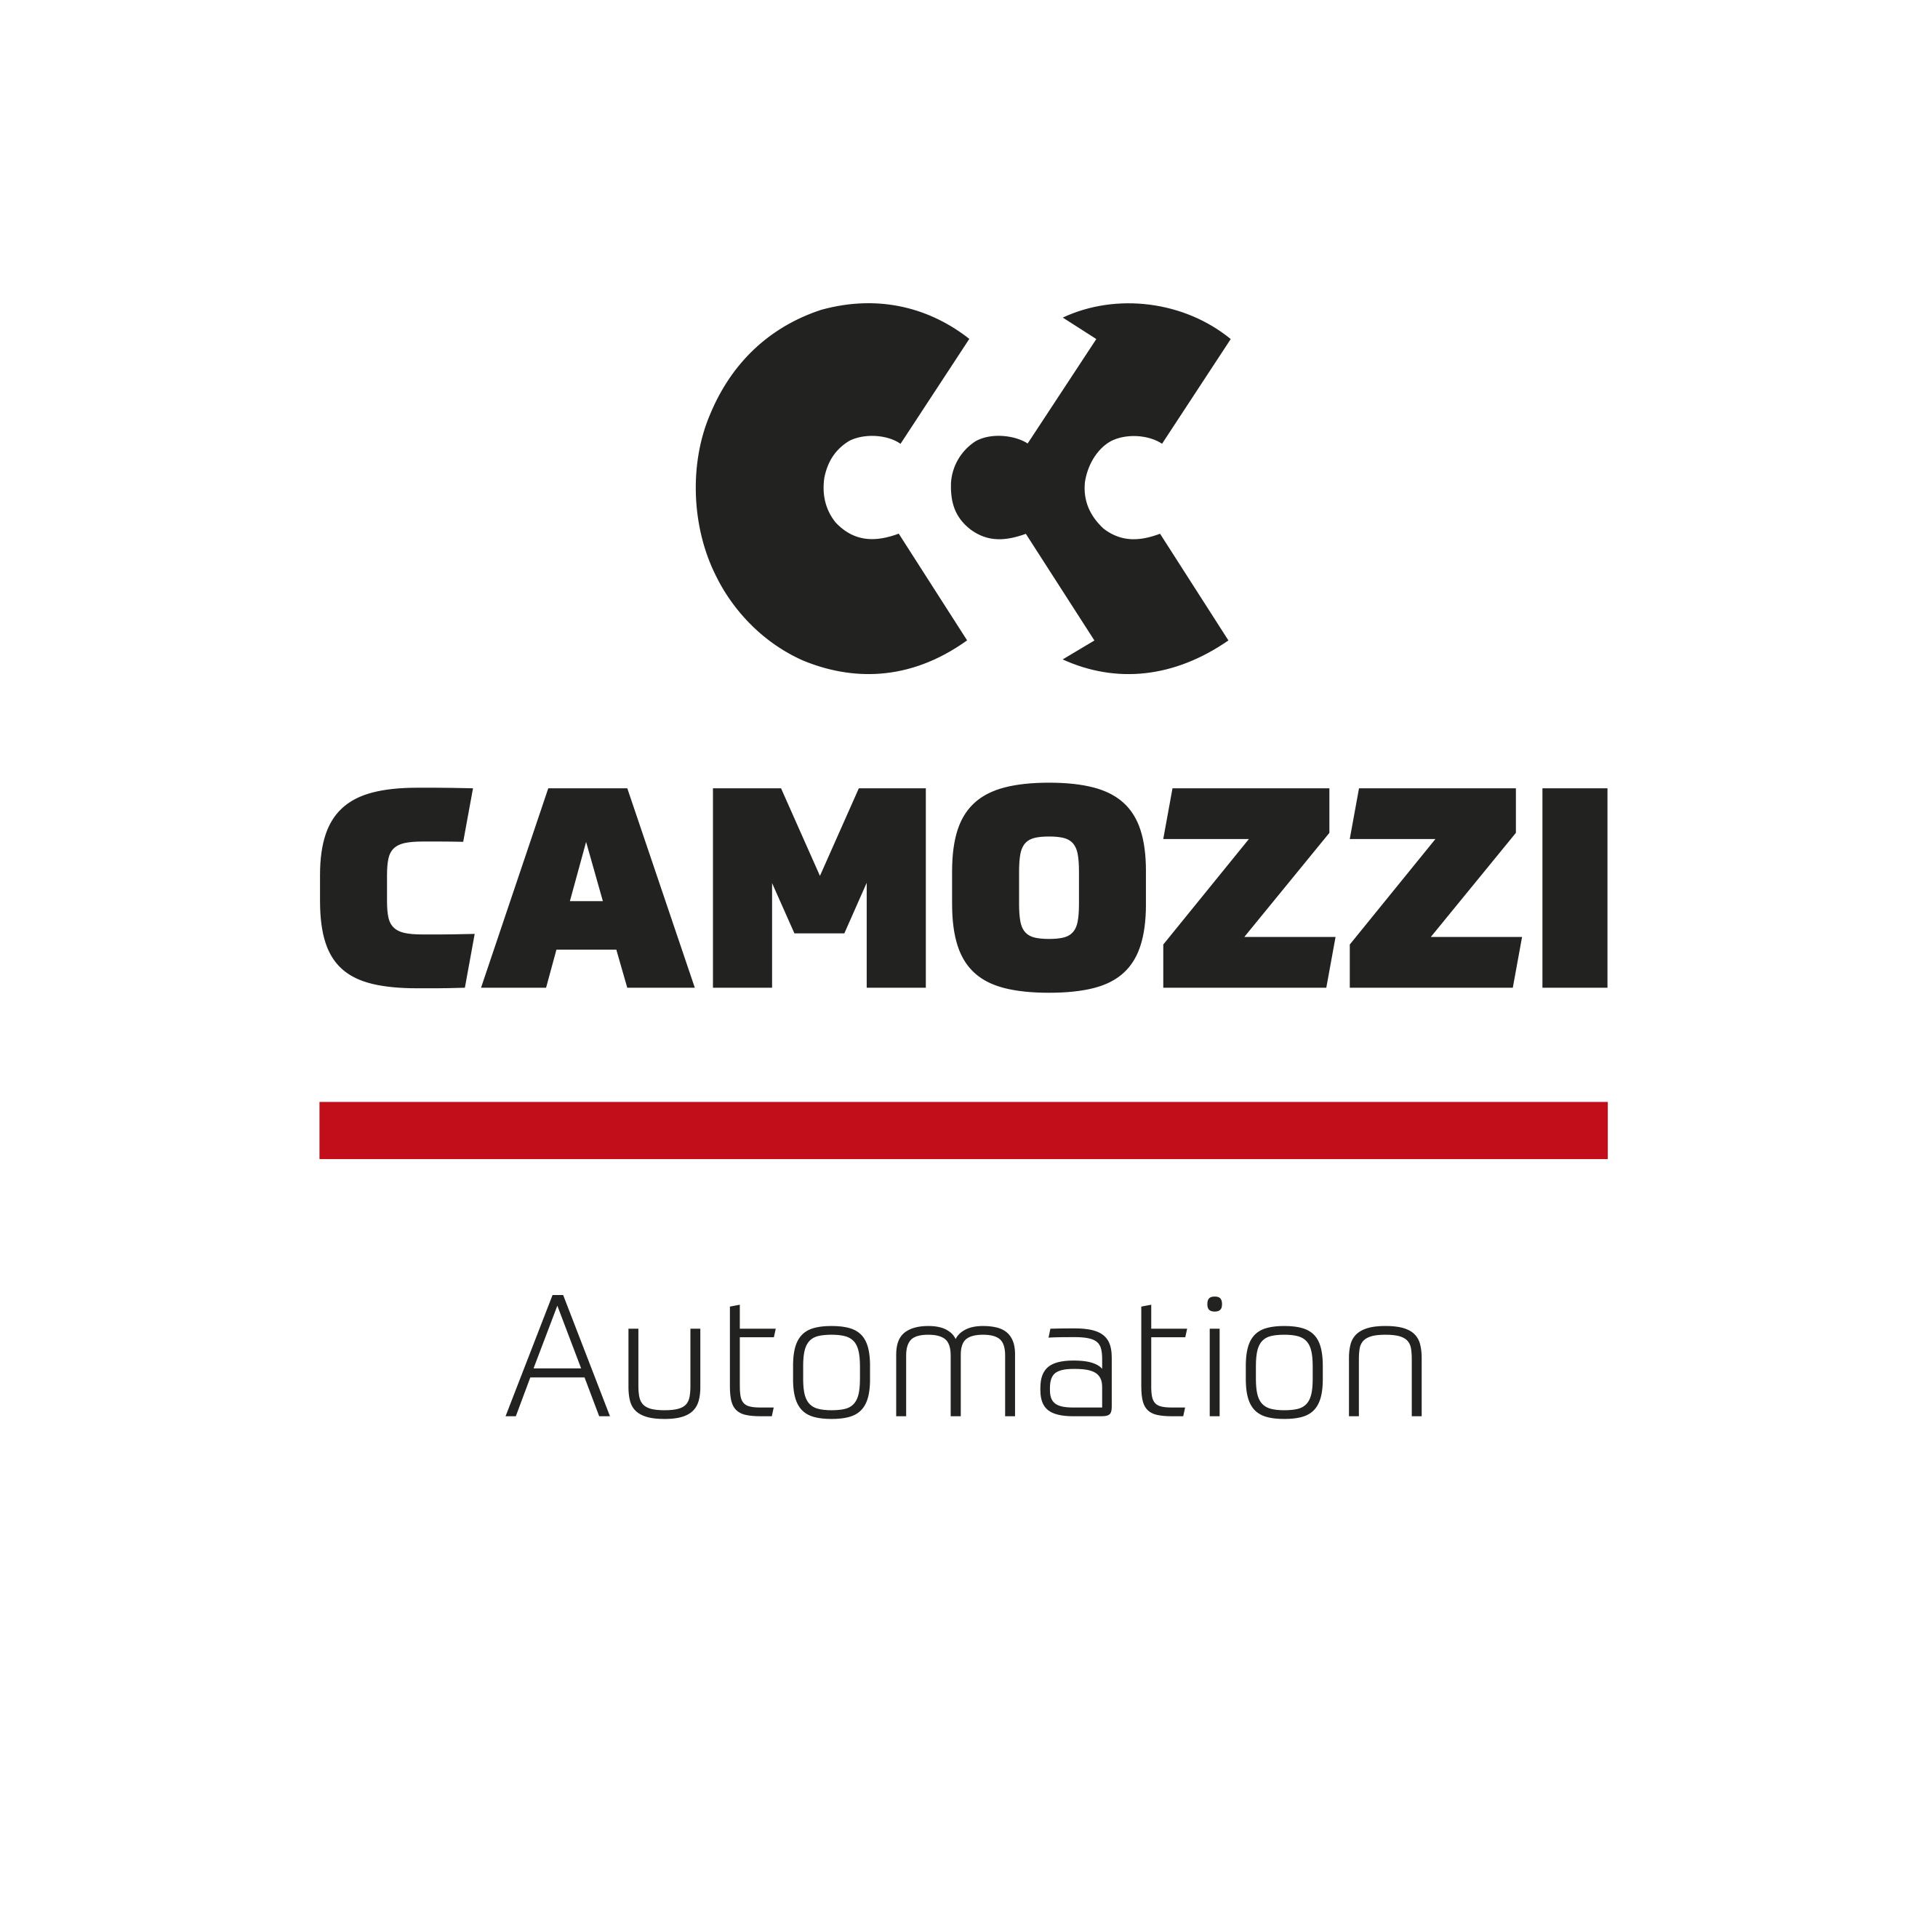 CAMOZZI Automation